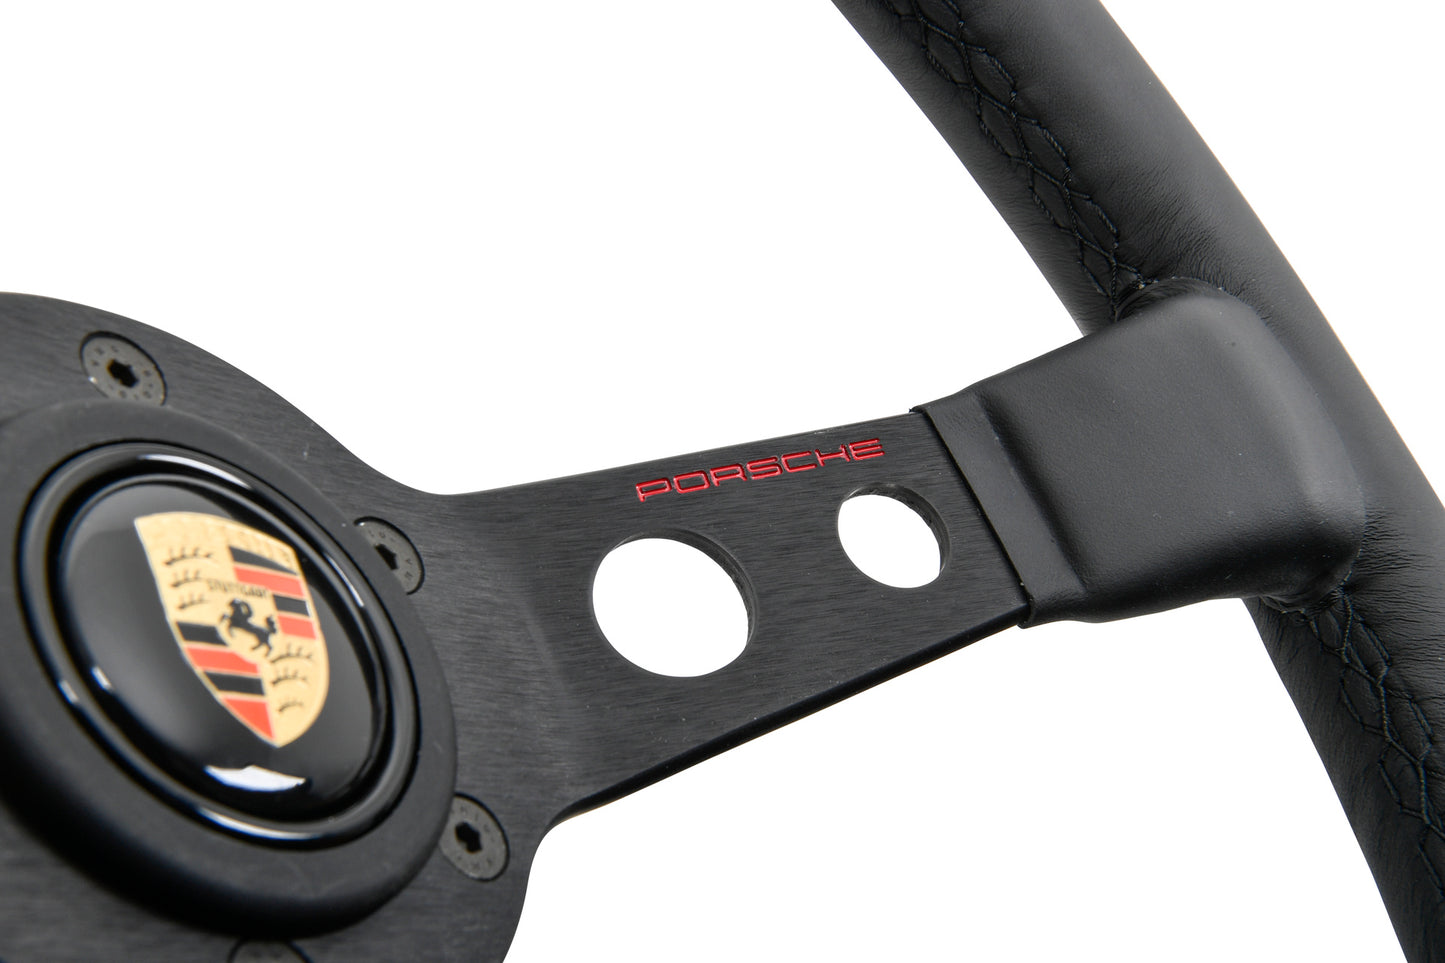 Porsche Classic performance steering wheel, black